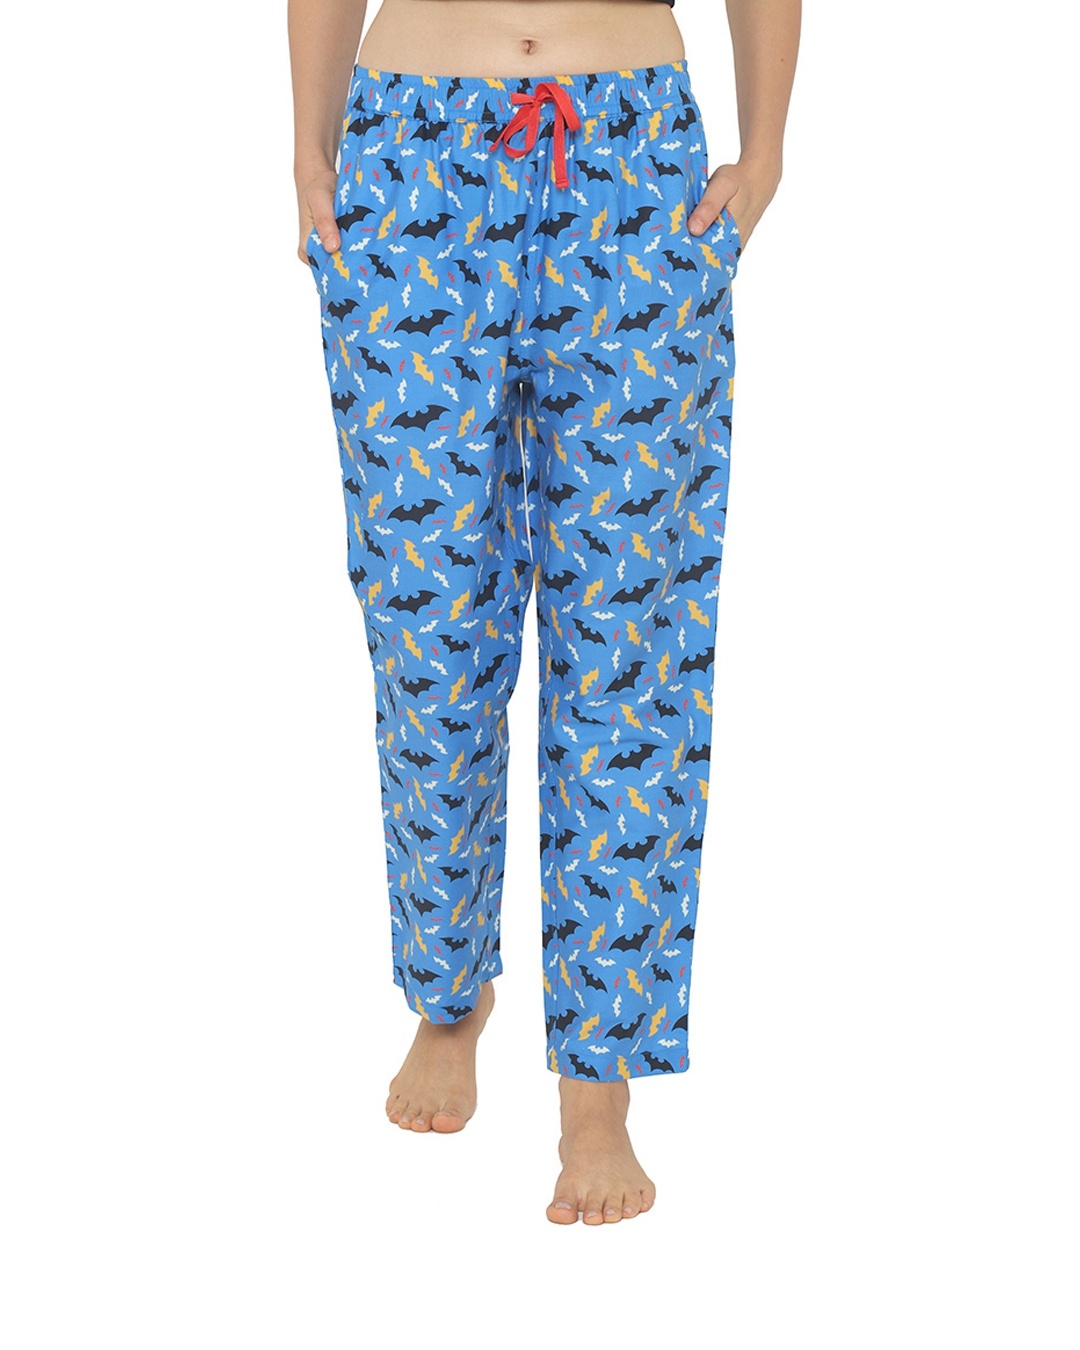 Shop Women's Blue Printed Regular Fit Pyjama